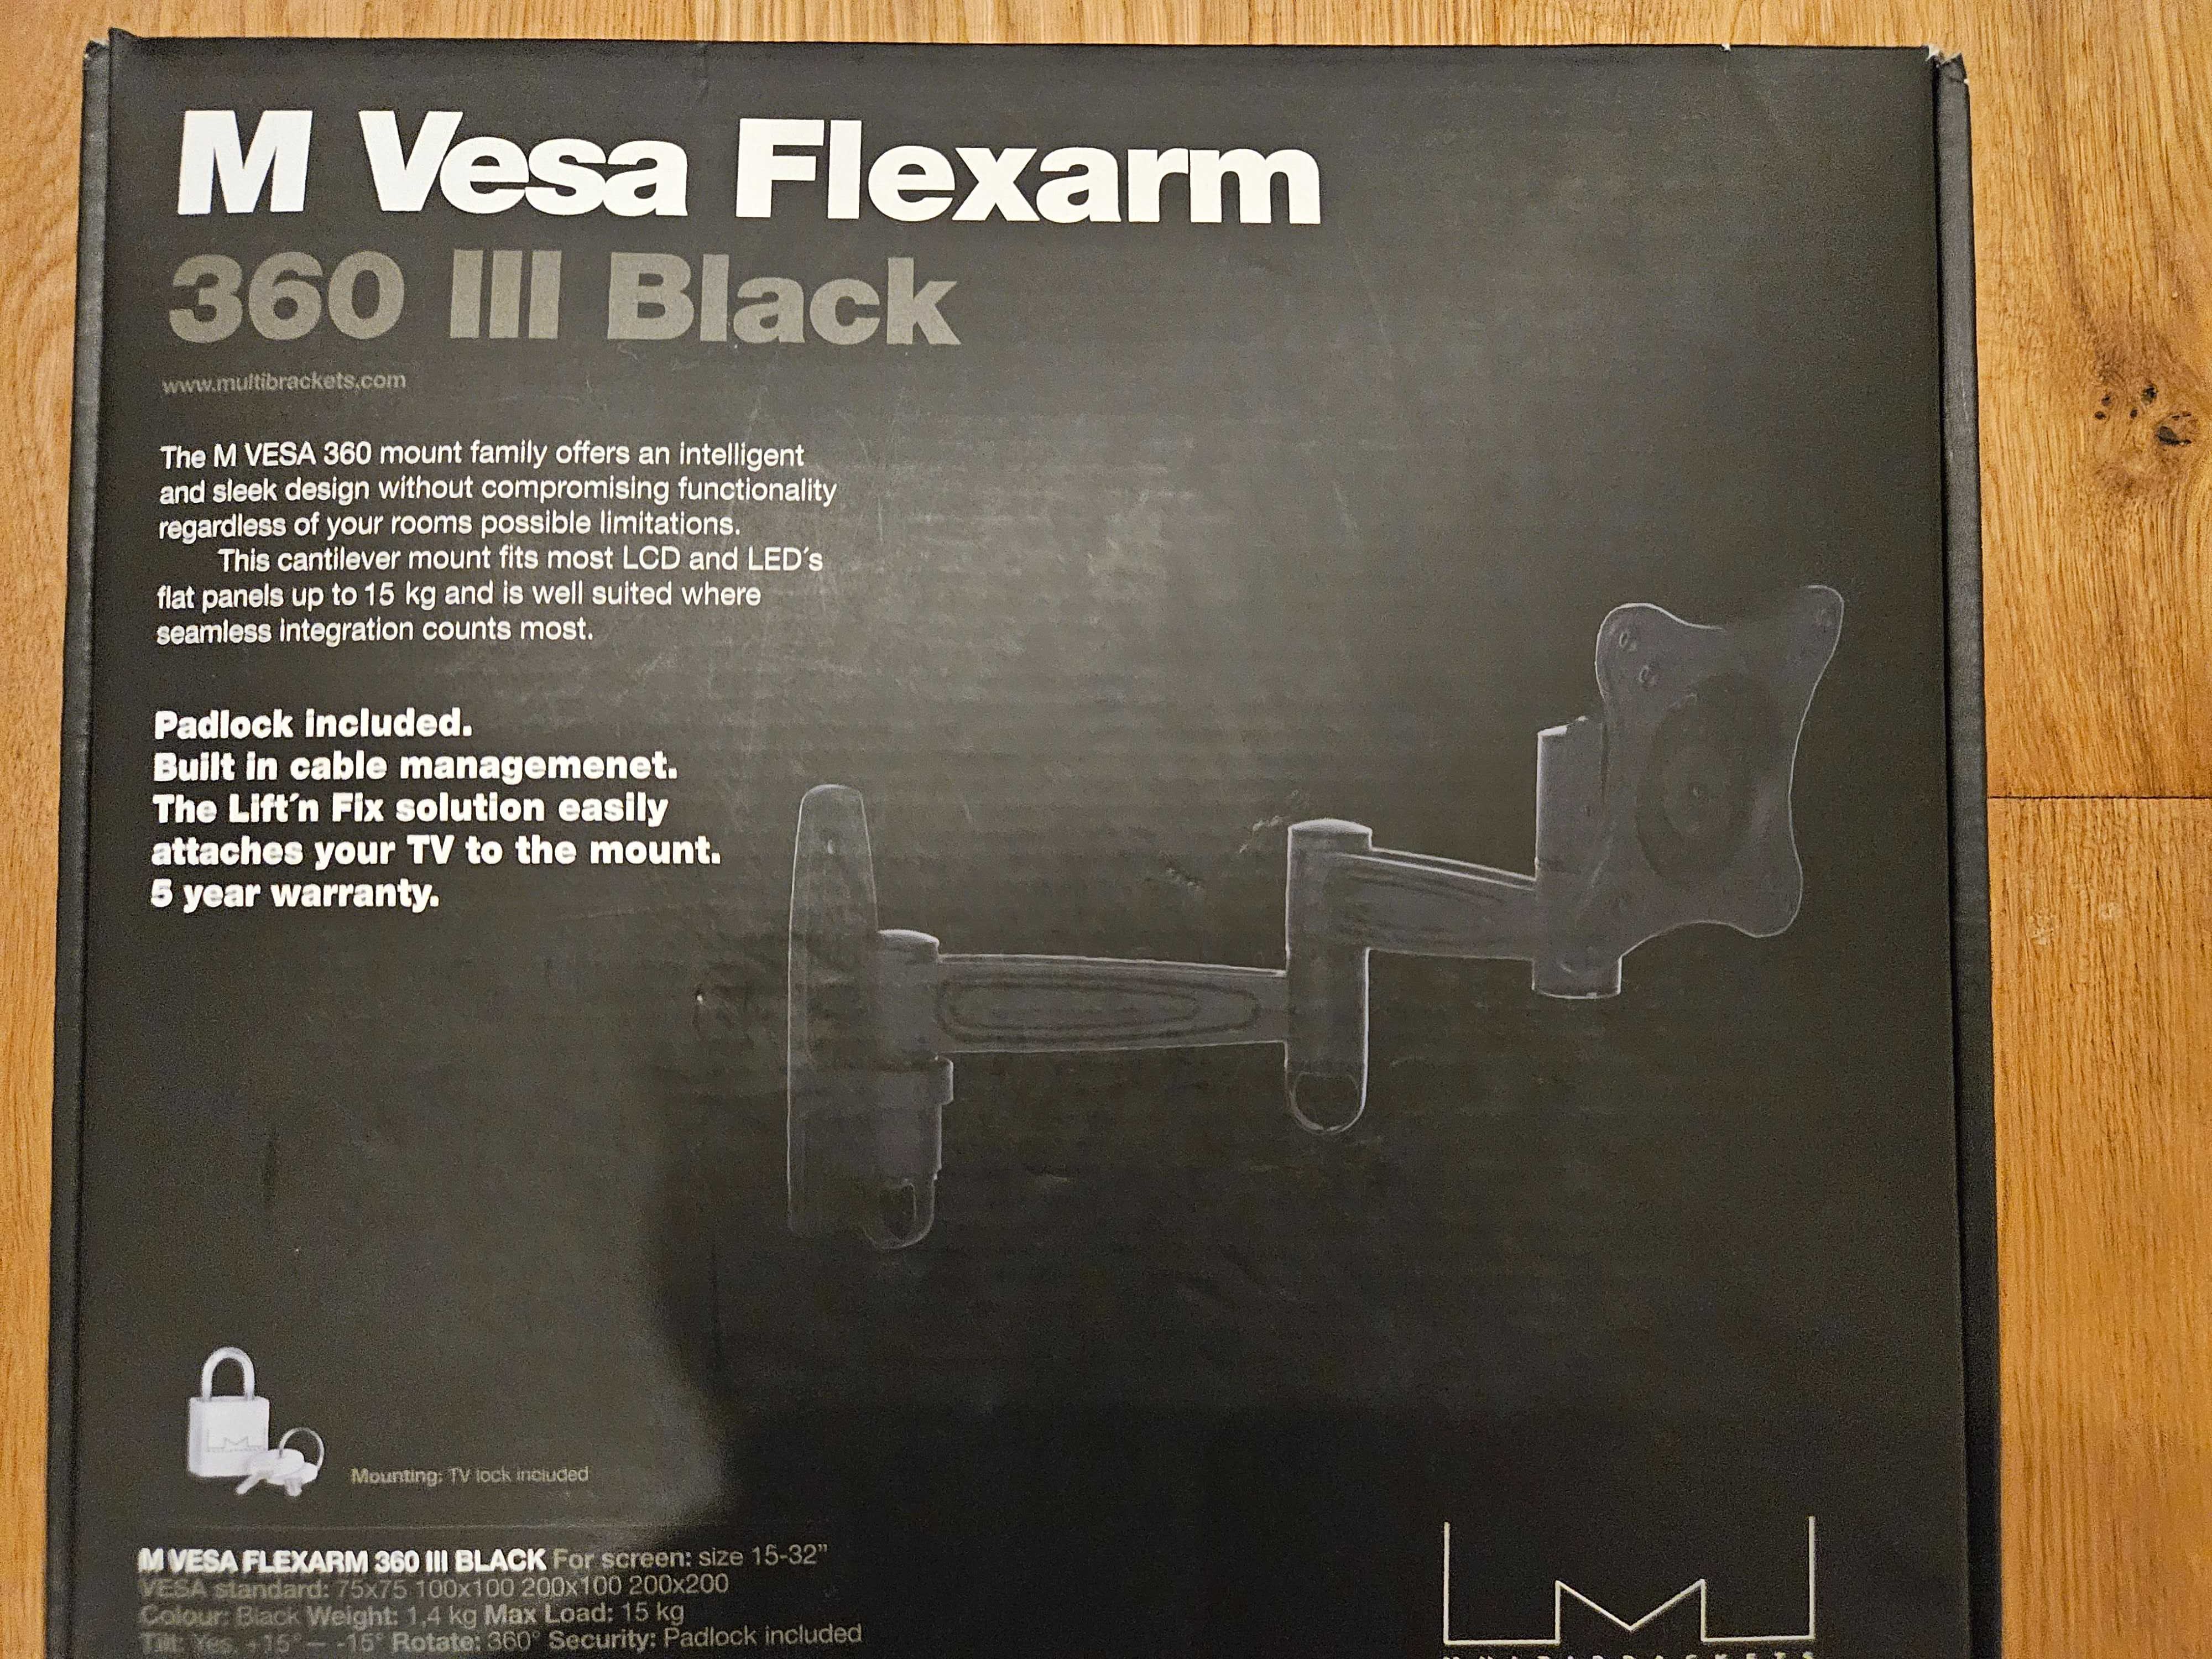 Wieszak do TV Multibrackets M Vesa Flexarm do 15 kg